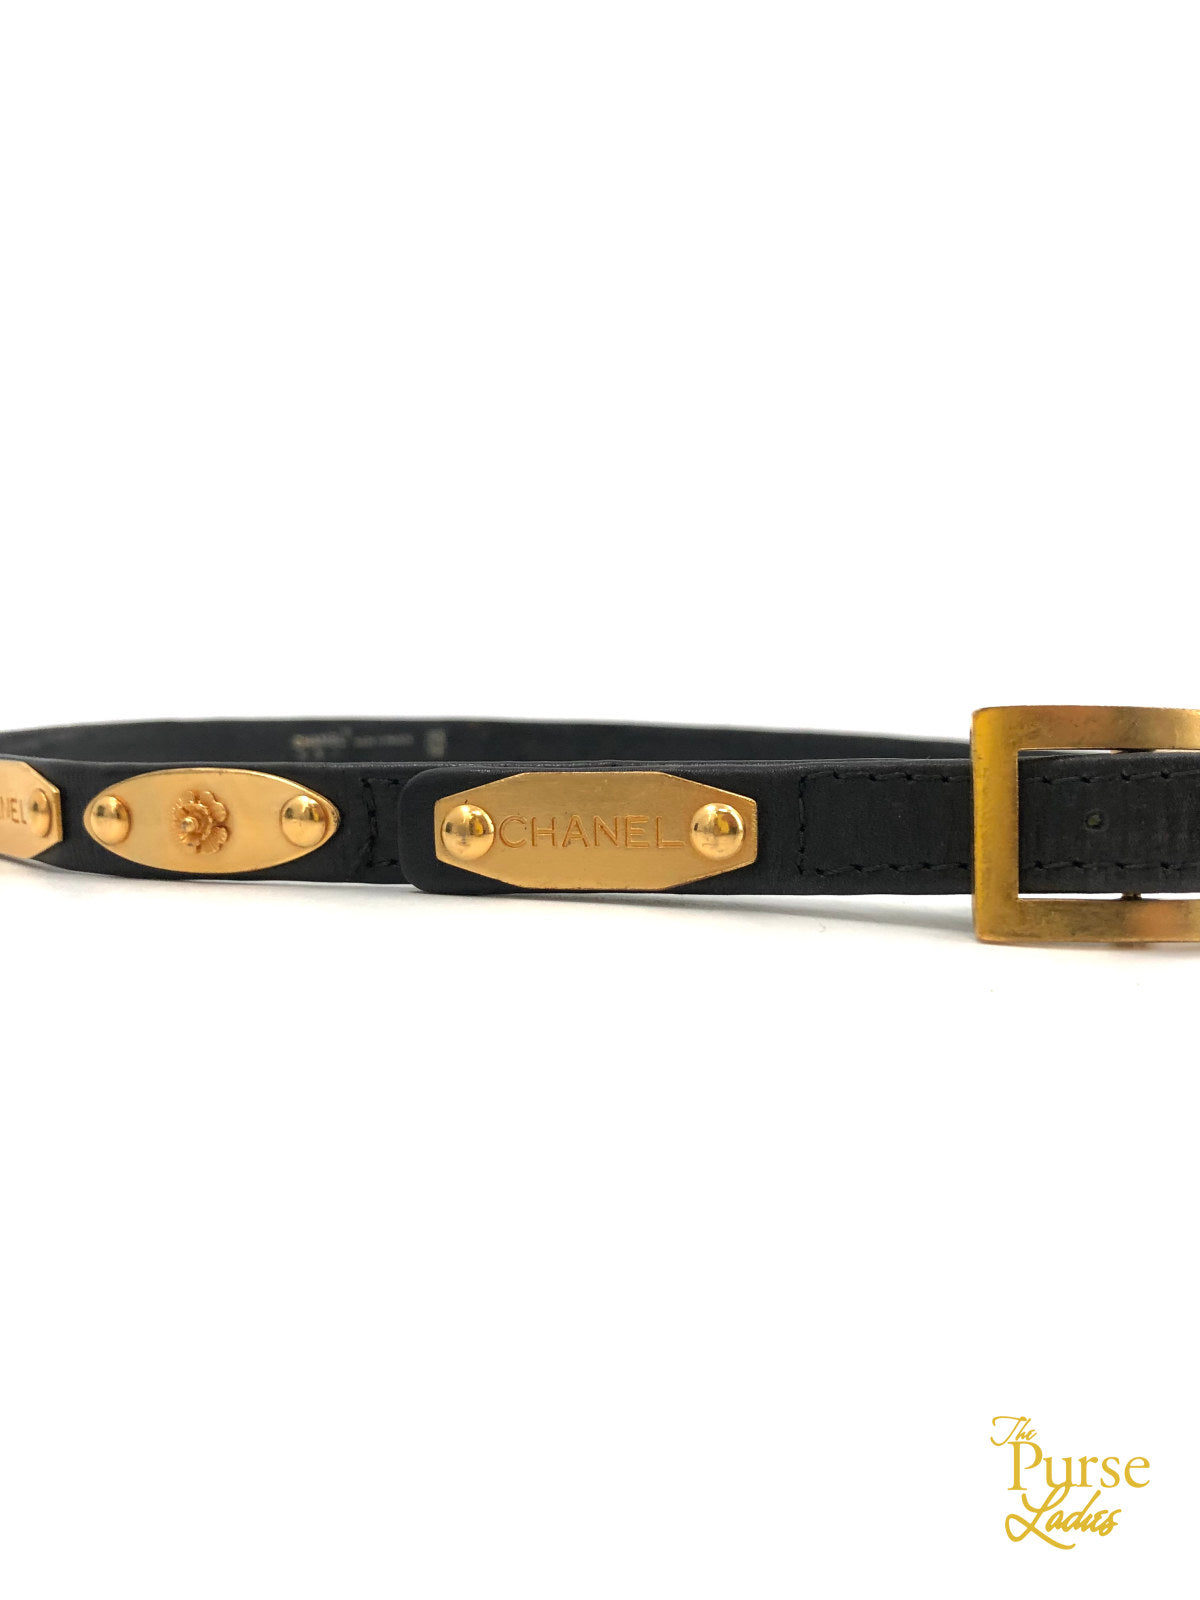 CHANEL CC Large Gold Buckle Evening Leather Waist Belt